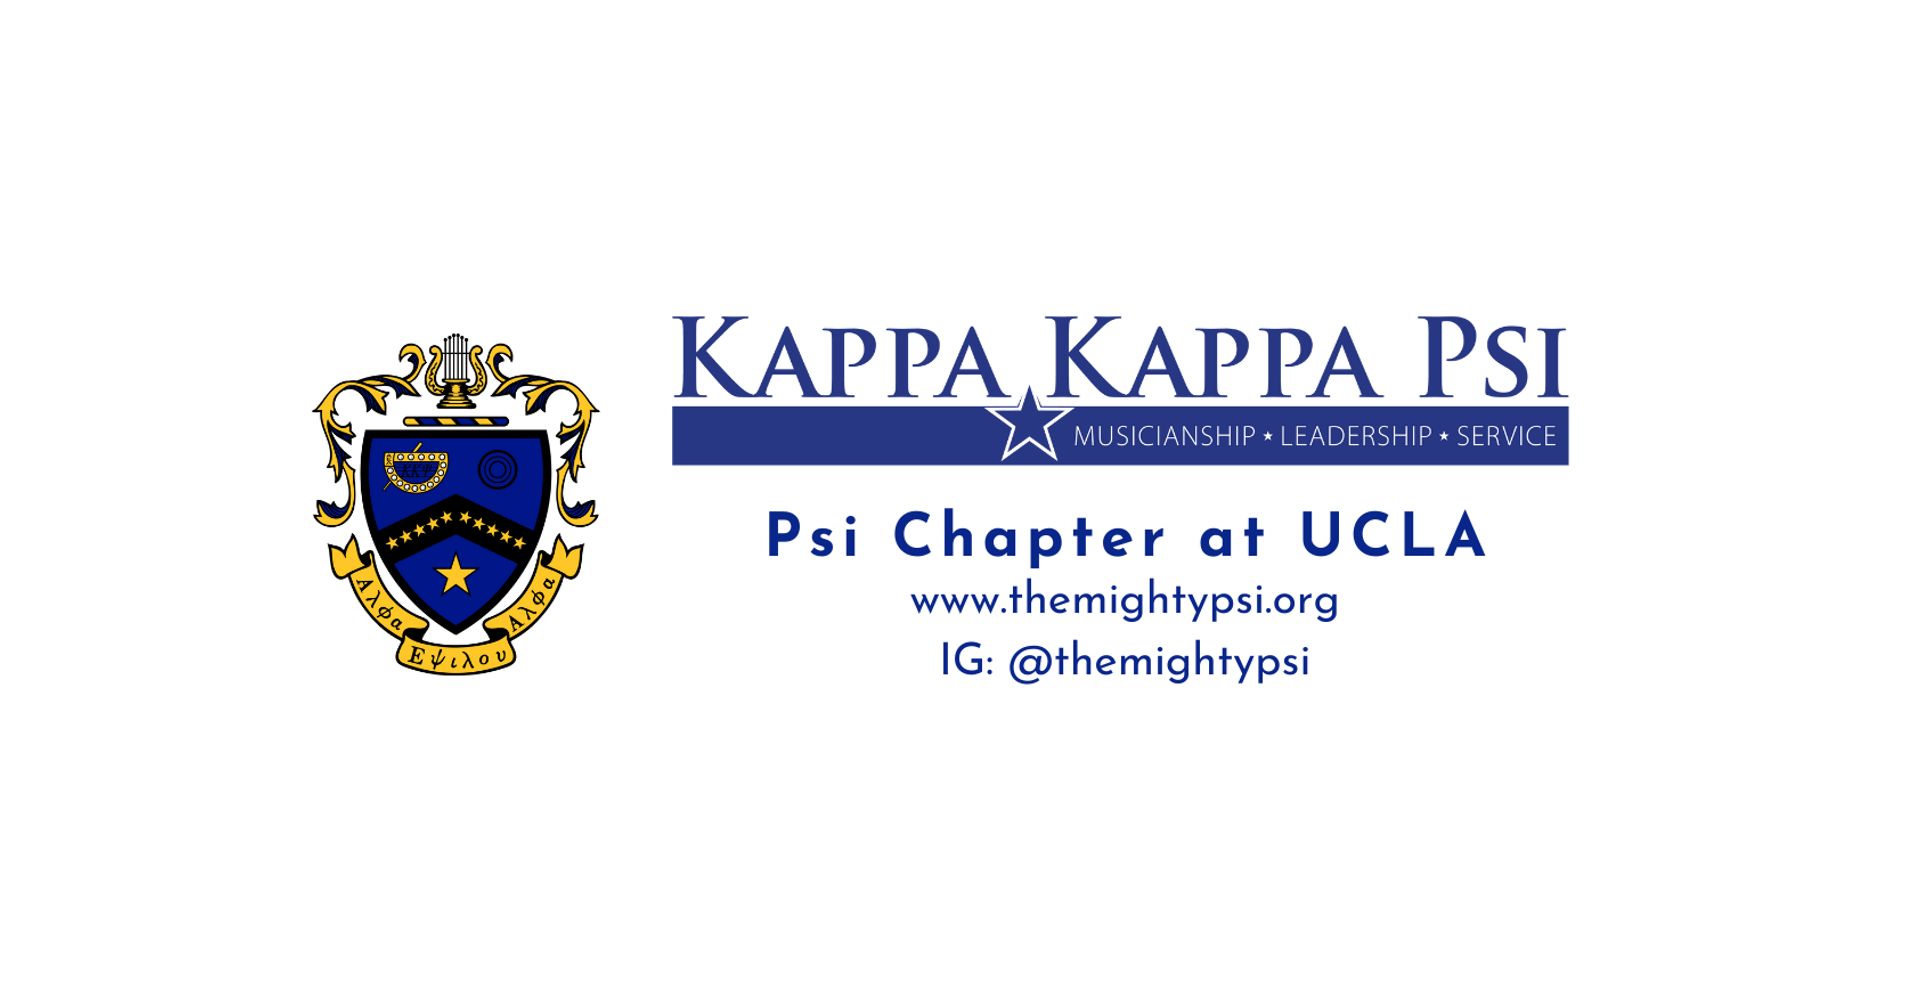 inerti voldgrav træ Kappa Kappa Psi - Psi Chapter - UCLA Community